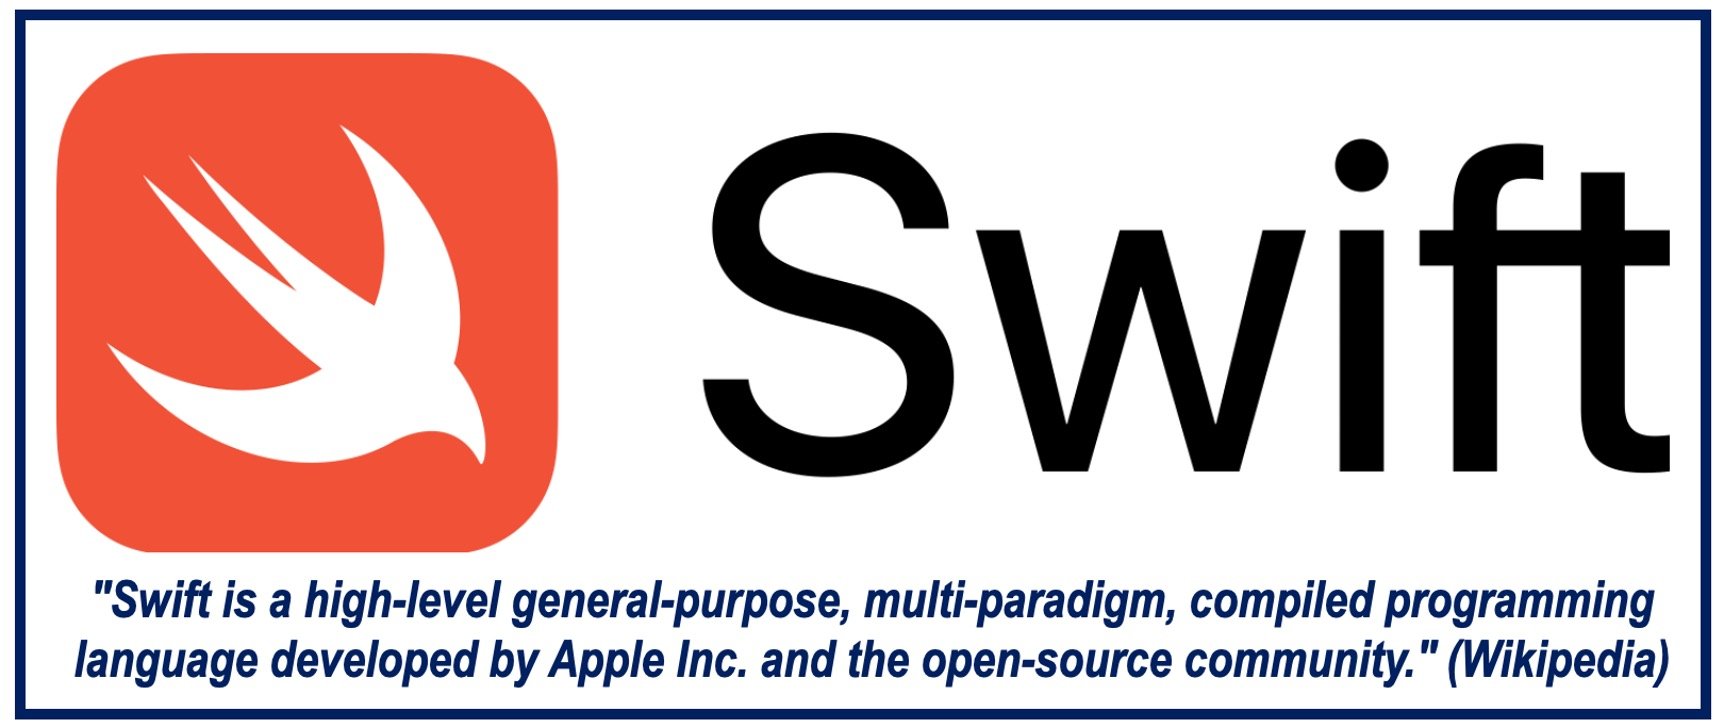 Swift programming language logo and description of the language